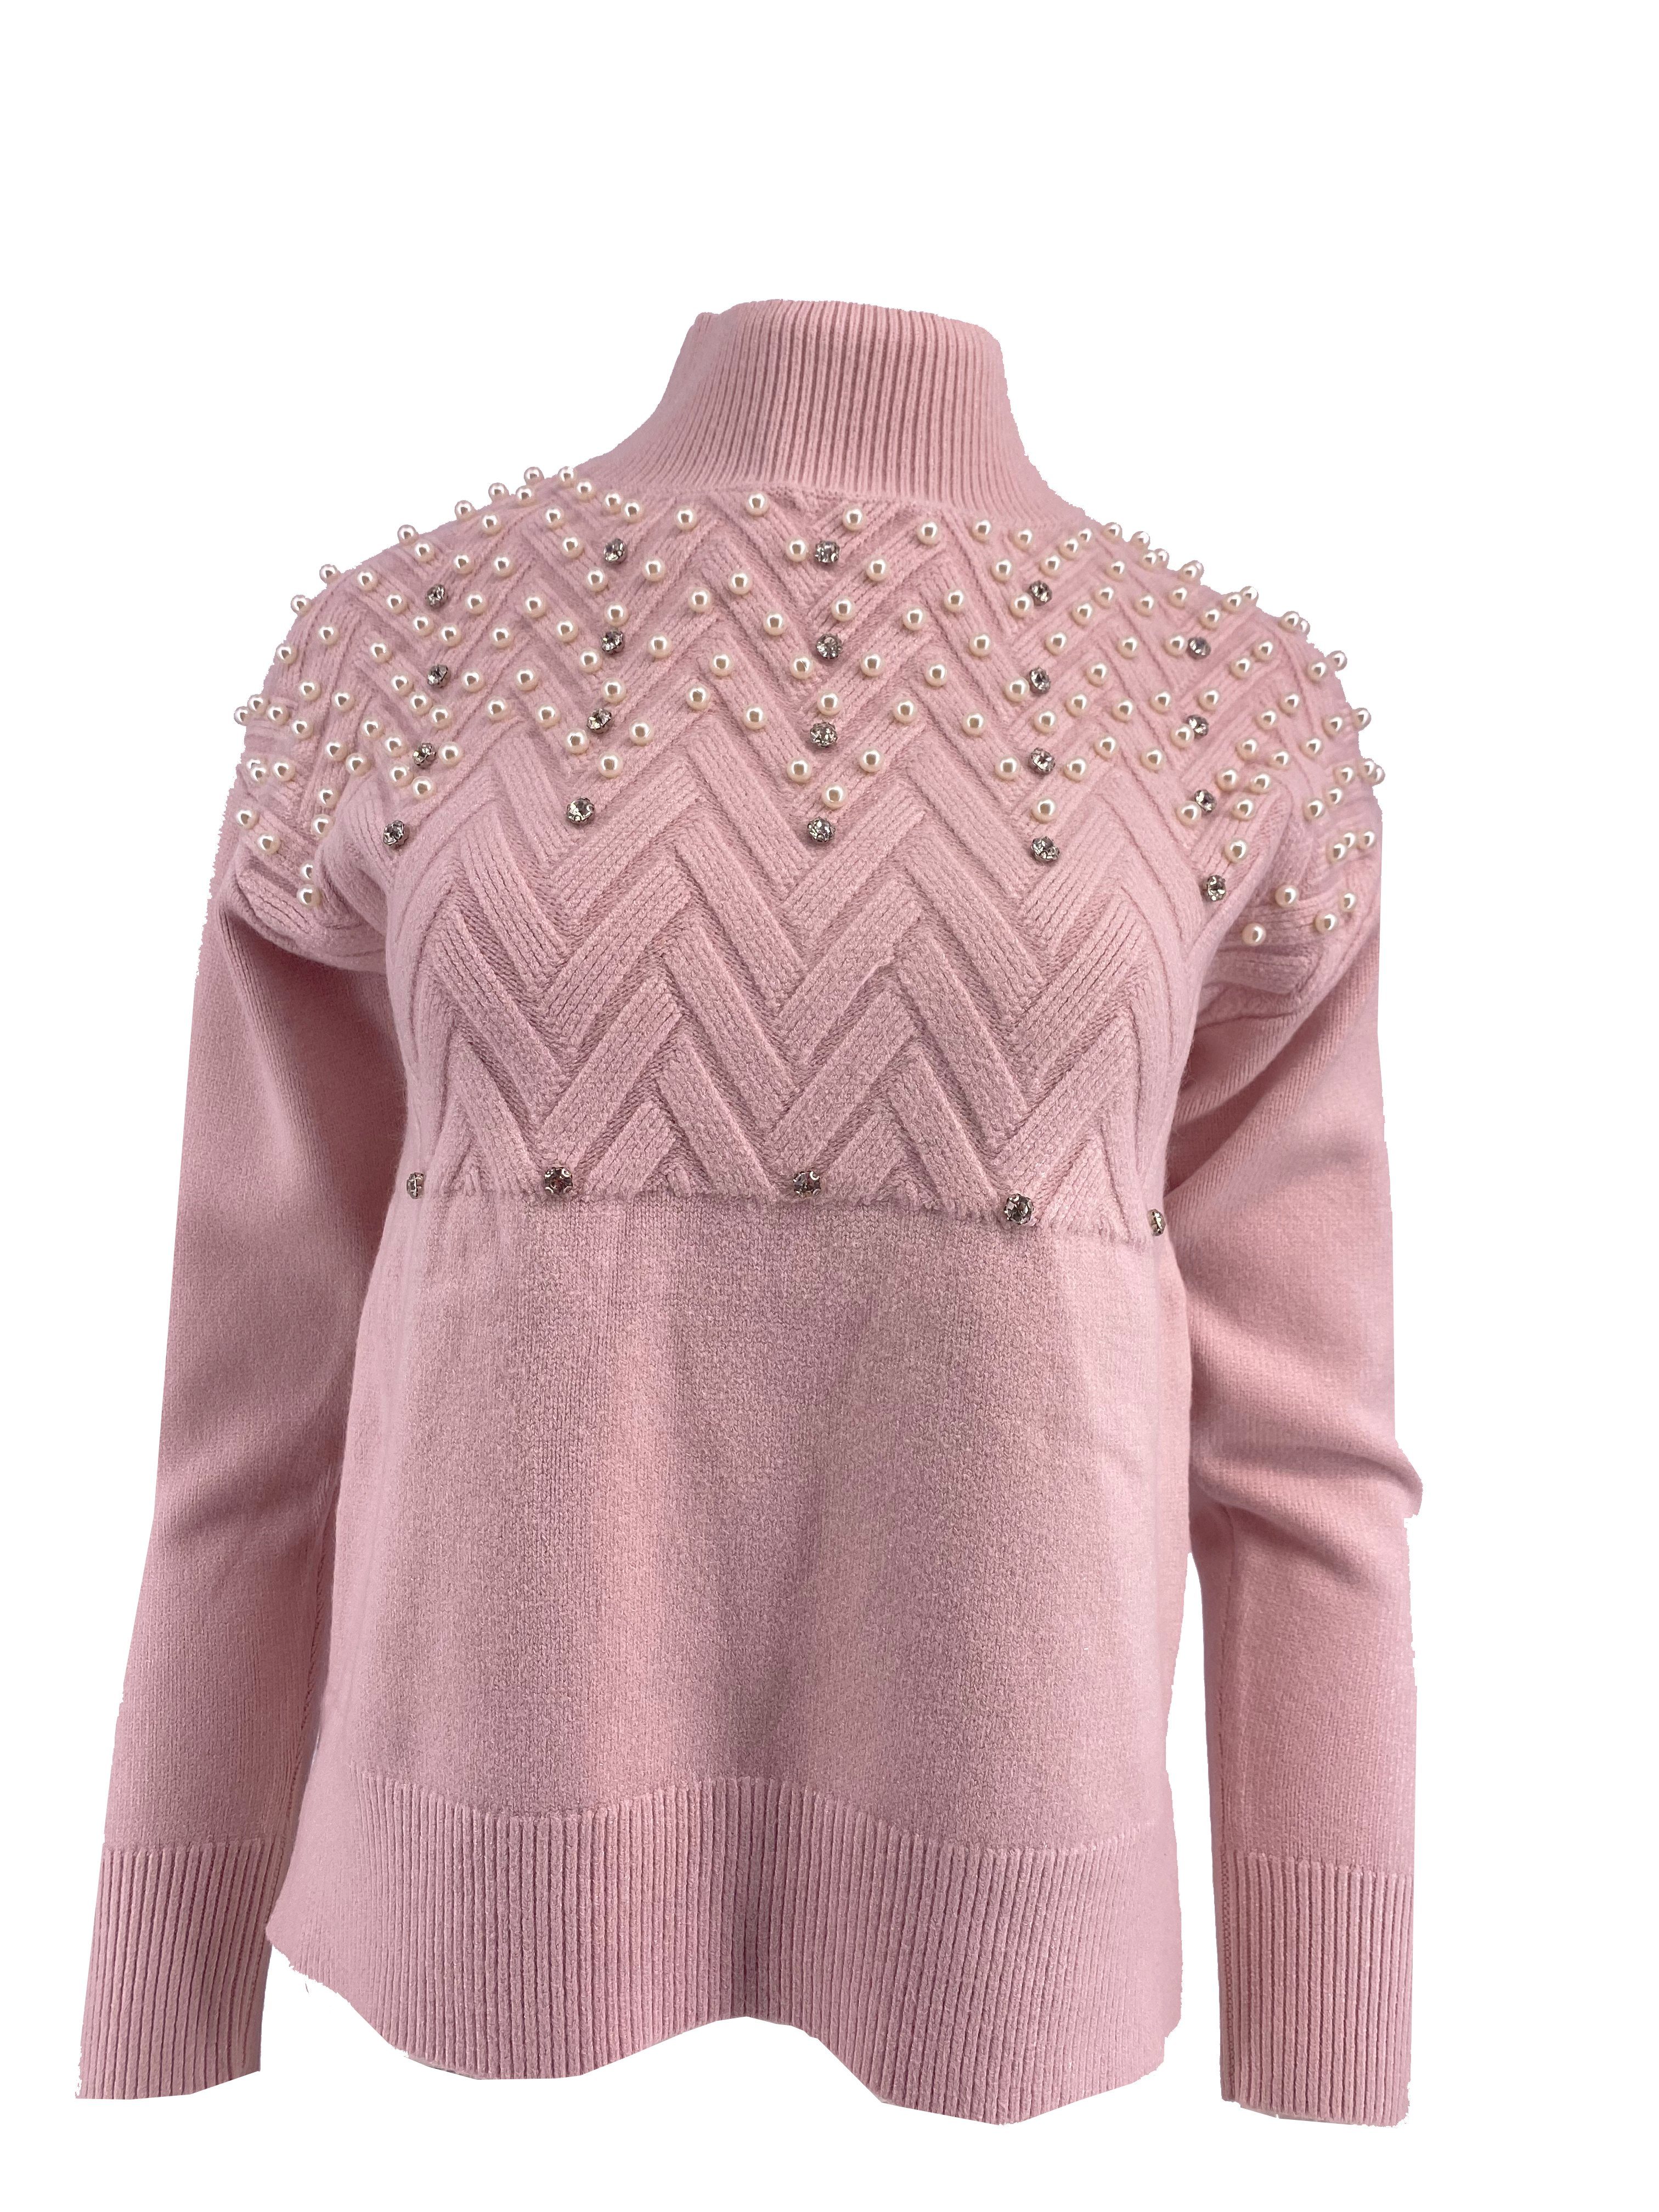 Passioni Strickpullover Pullover im Vokuhila-Stil mit Schmuck-Applikationen